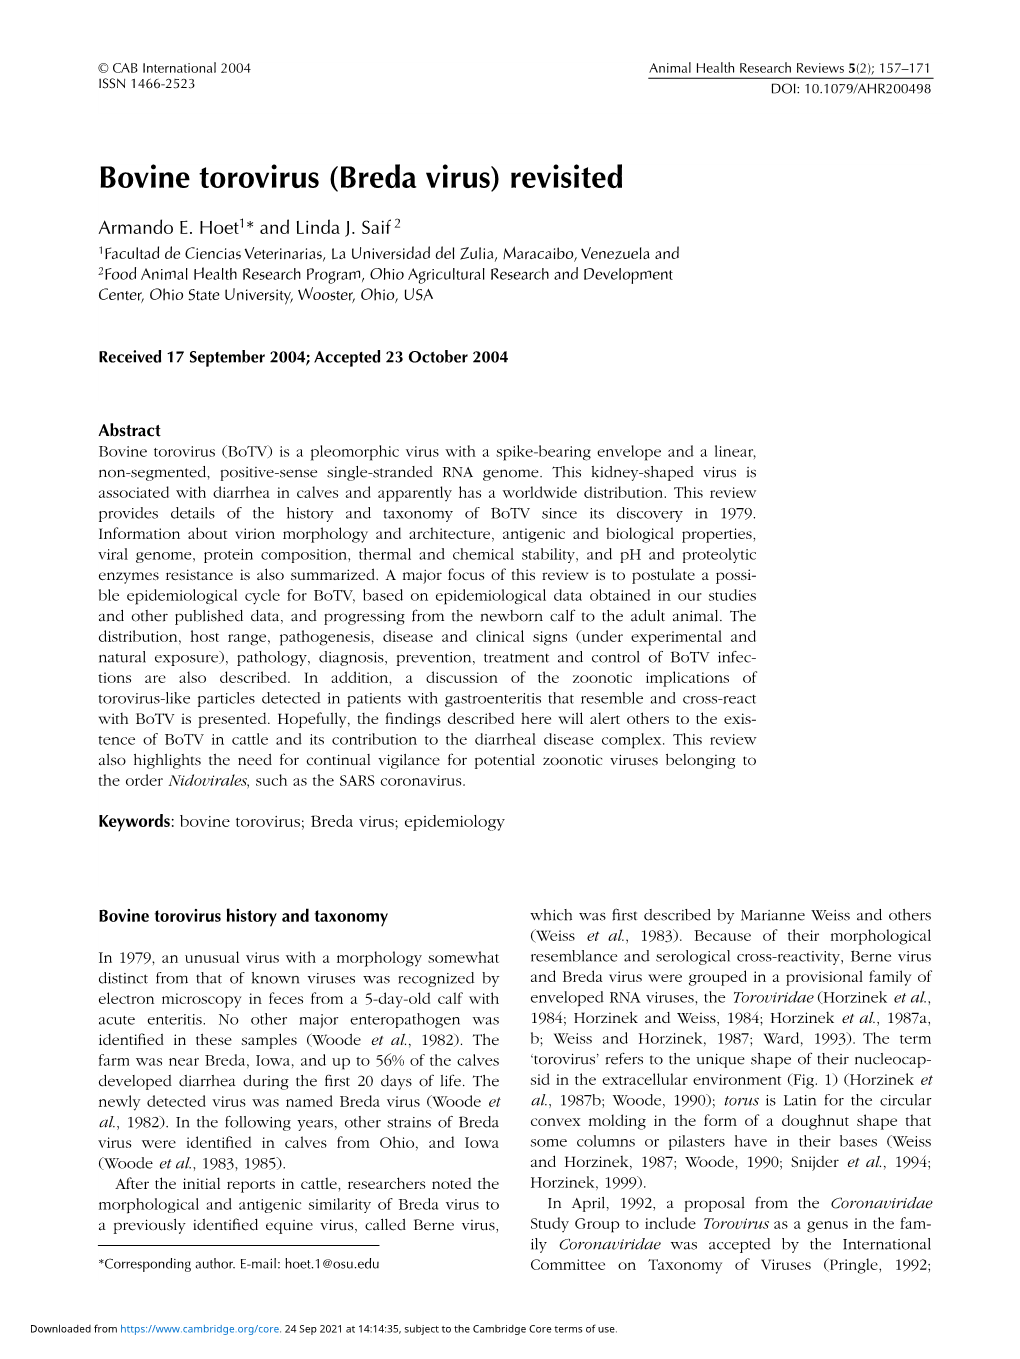 Bovine Torovirus (Breda Virus) Revisited